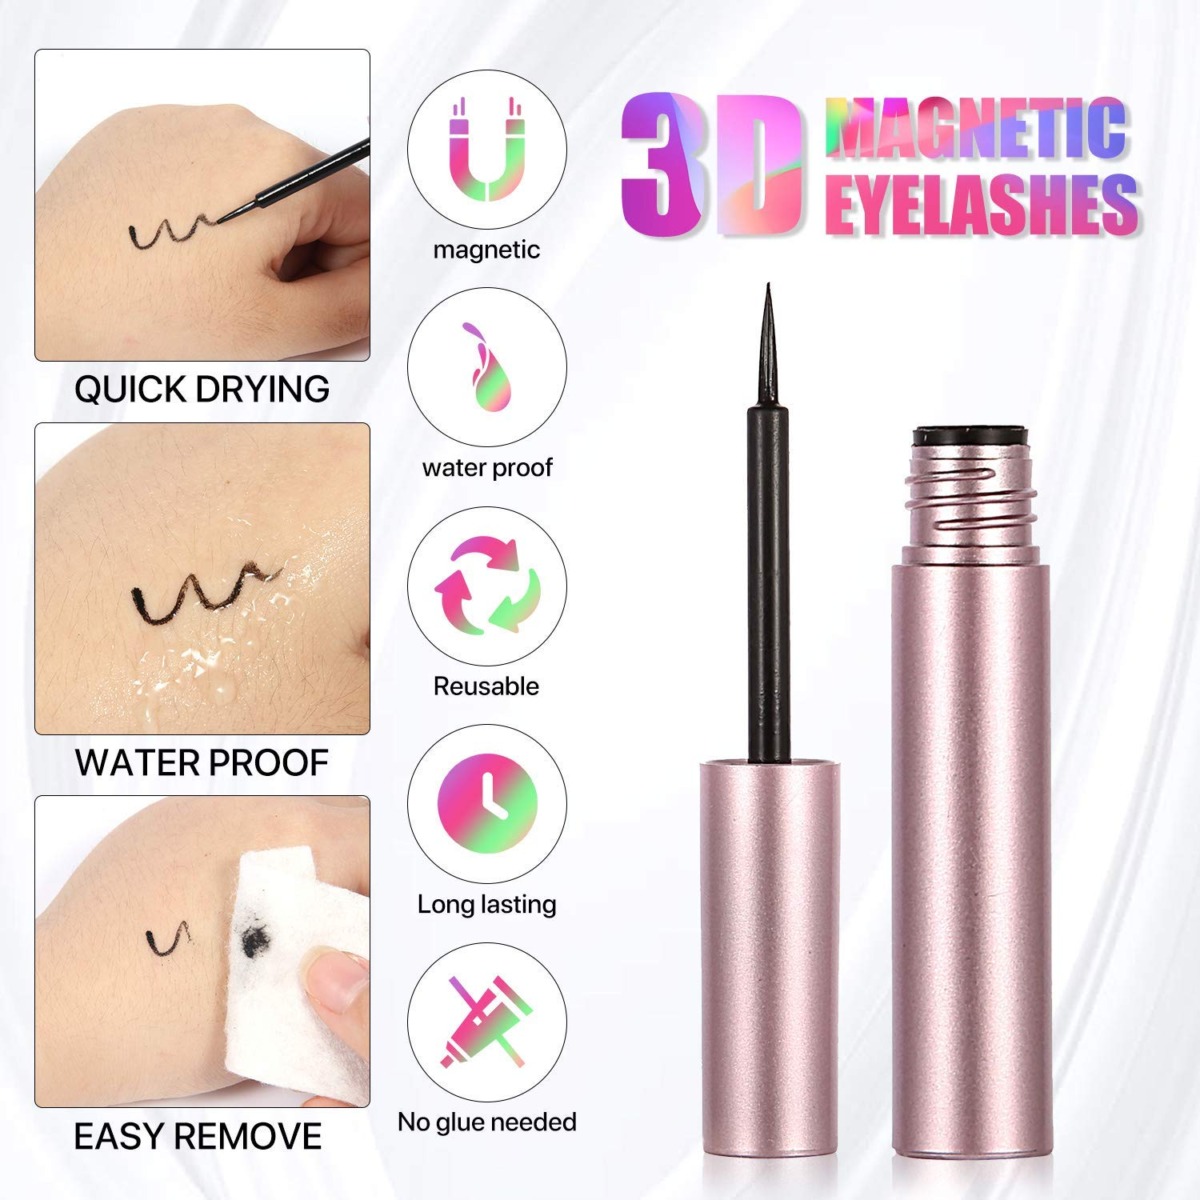 Magnetic Eyelashes With Eyeliner 7 Pairs Kit 2021 Upgraded,3D Magnetic Eyelashes Set Natural Look Fluffy Reusable | The Storepaperoomates Retail Market - Fast Affordable Shopping